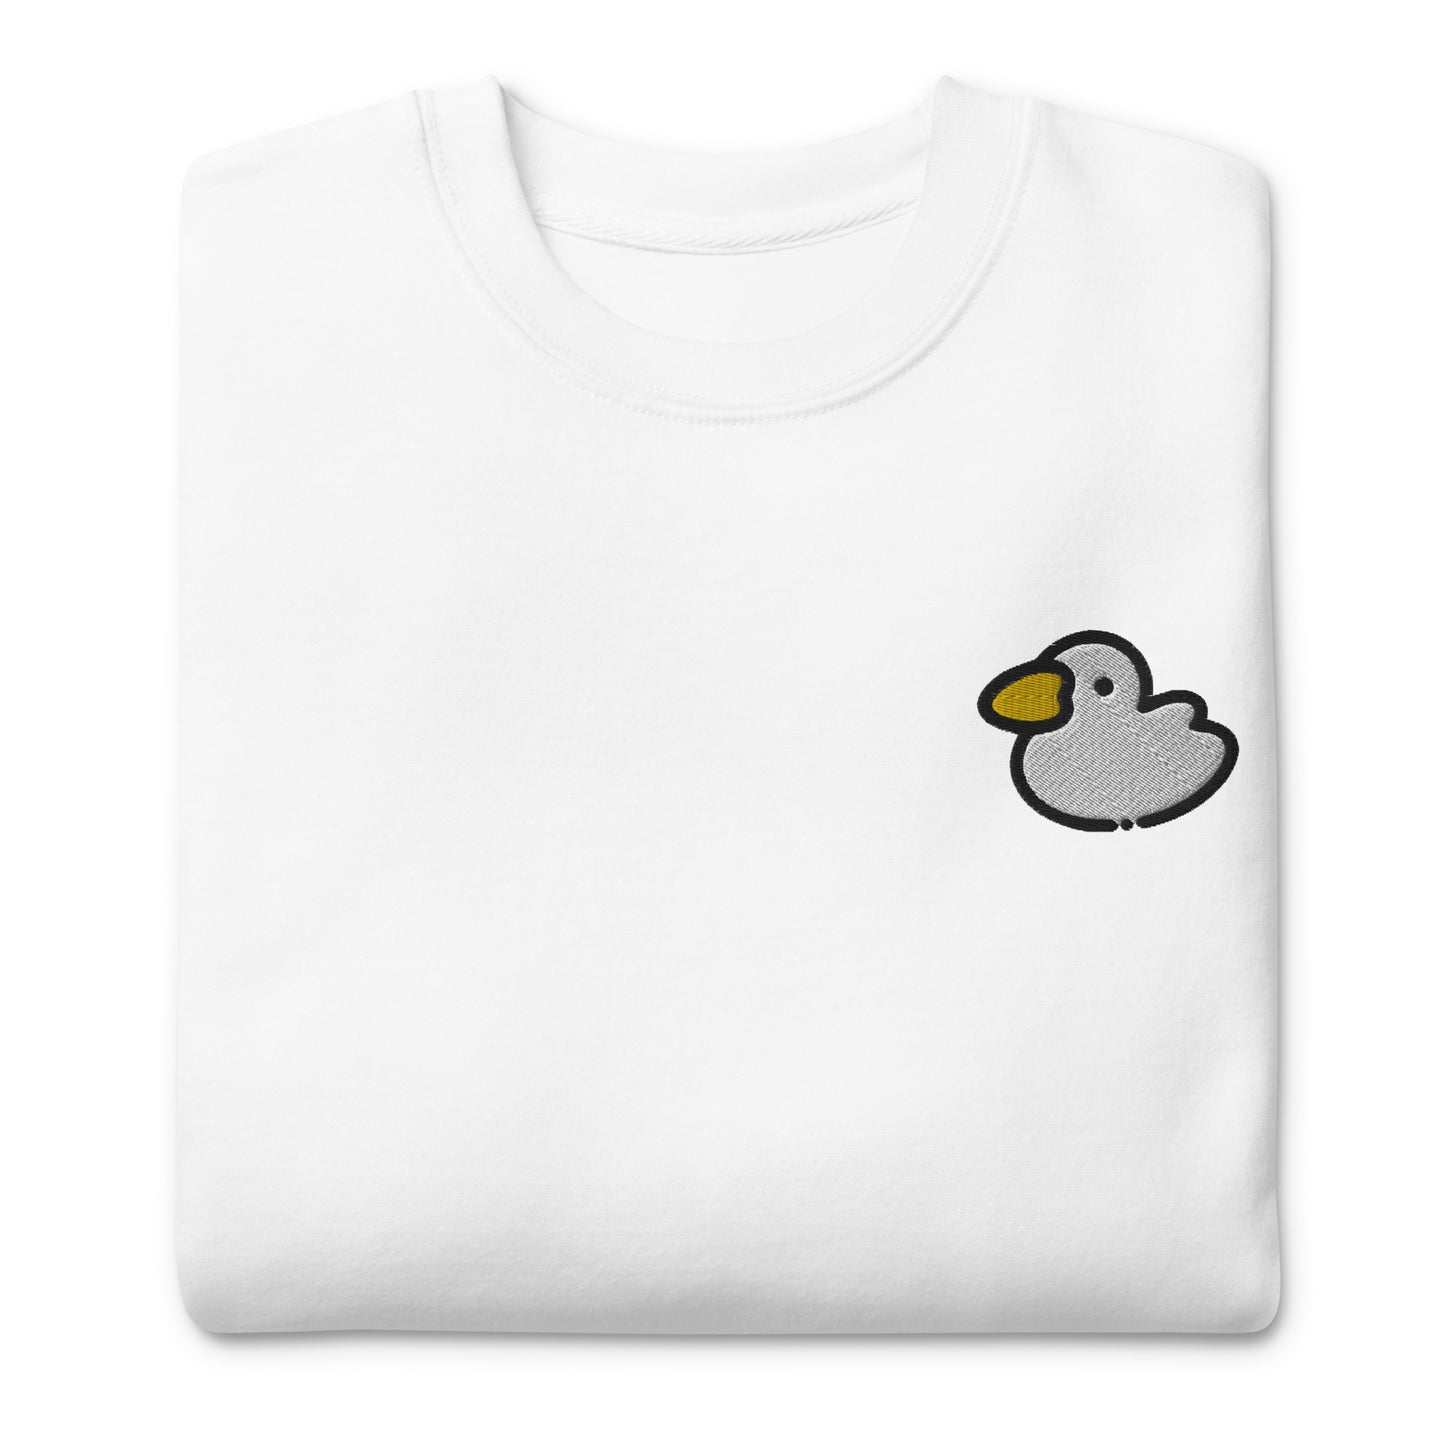 Duck Embroidered Sweatshirt